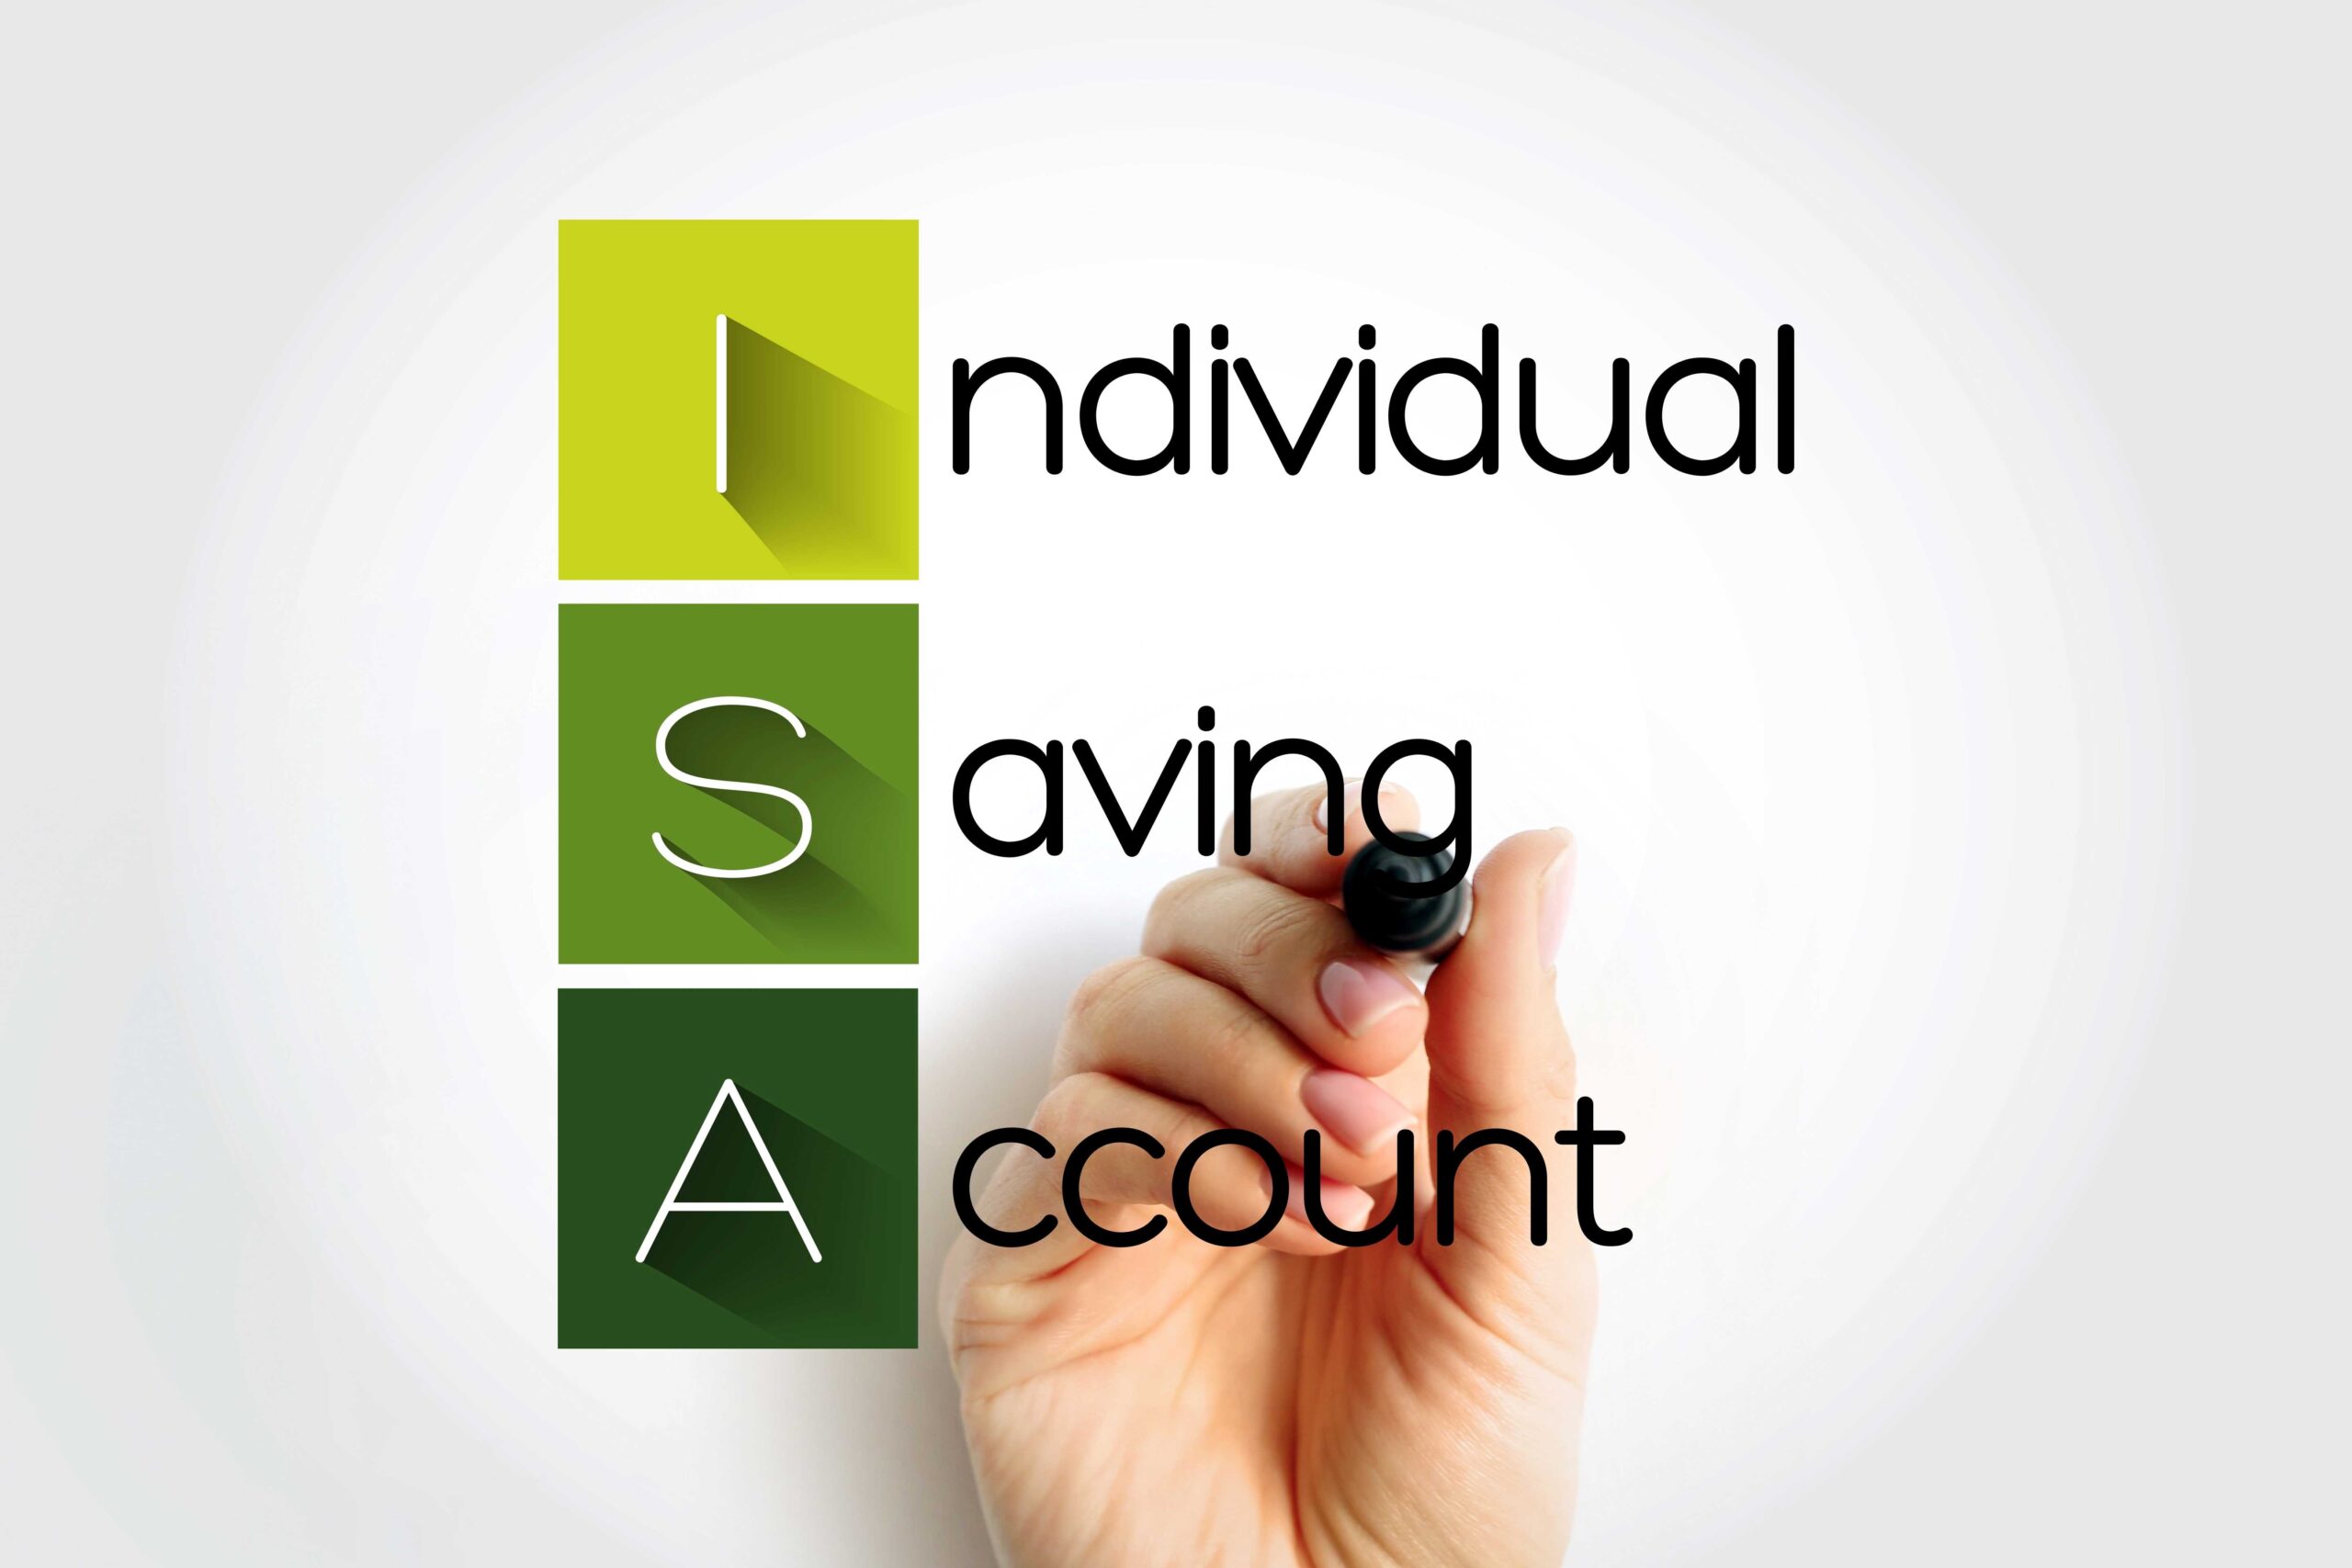 A revamp for individual savings accounts